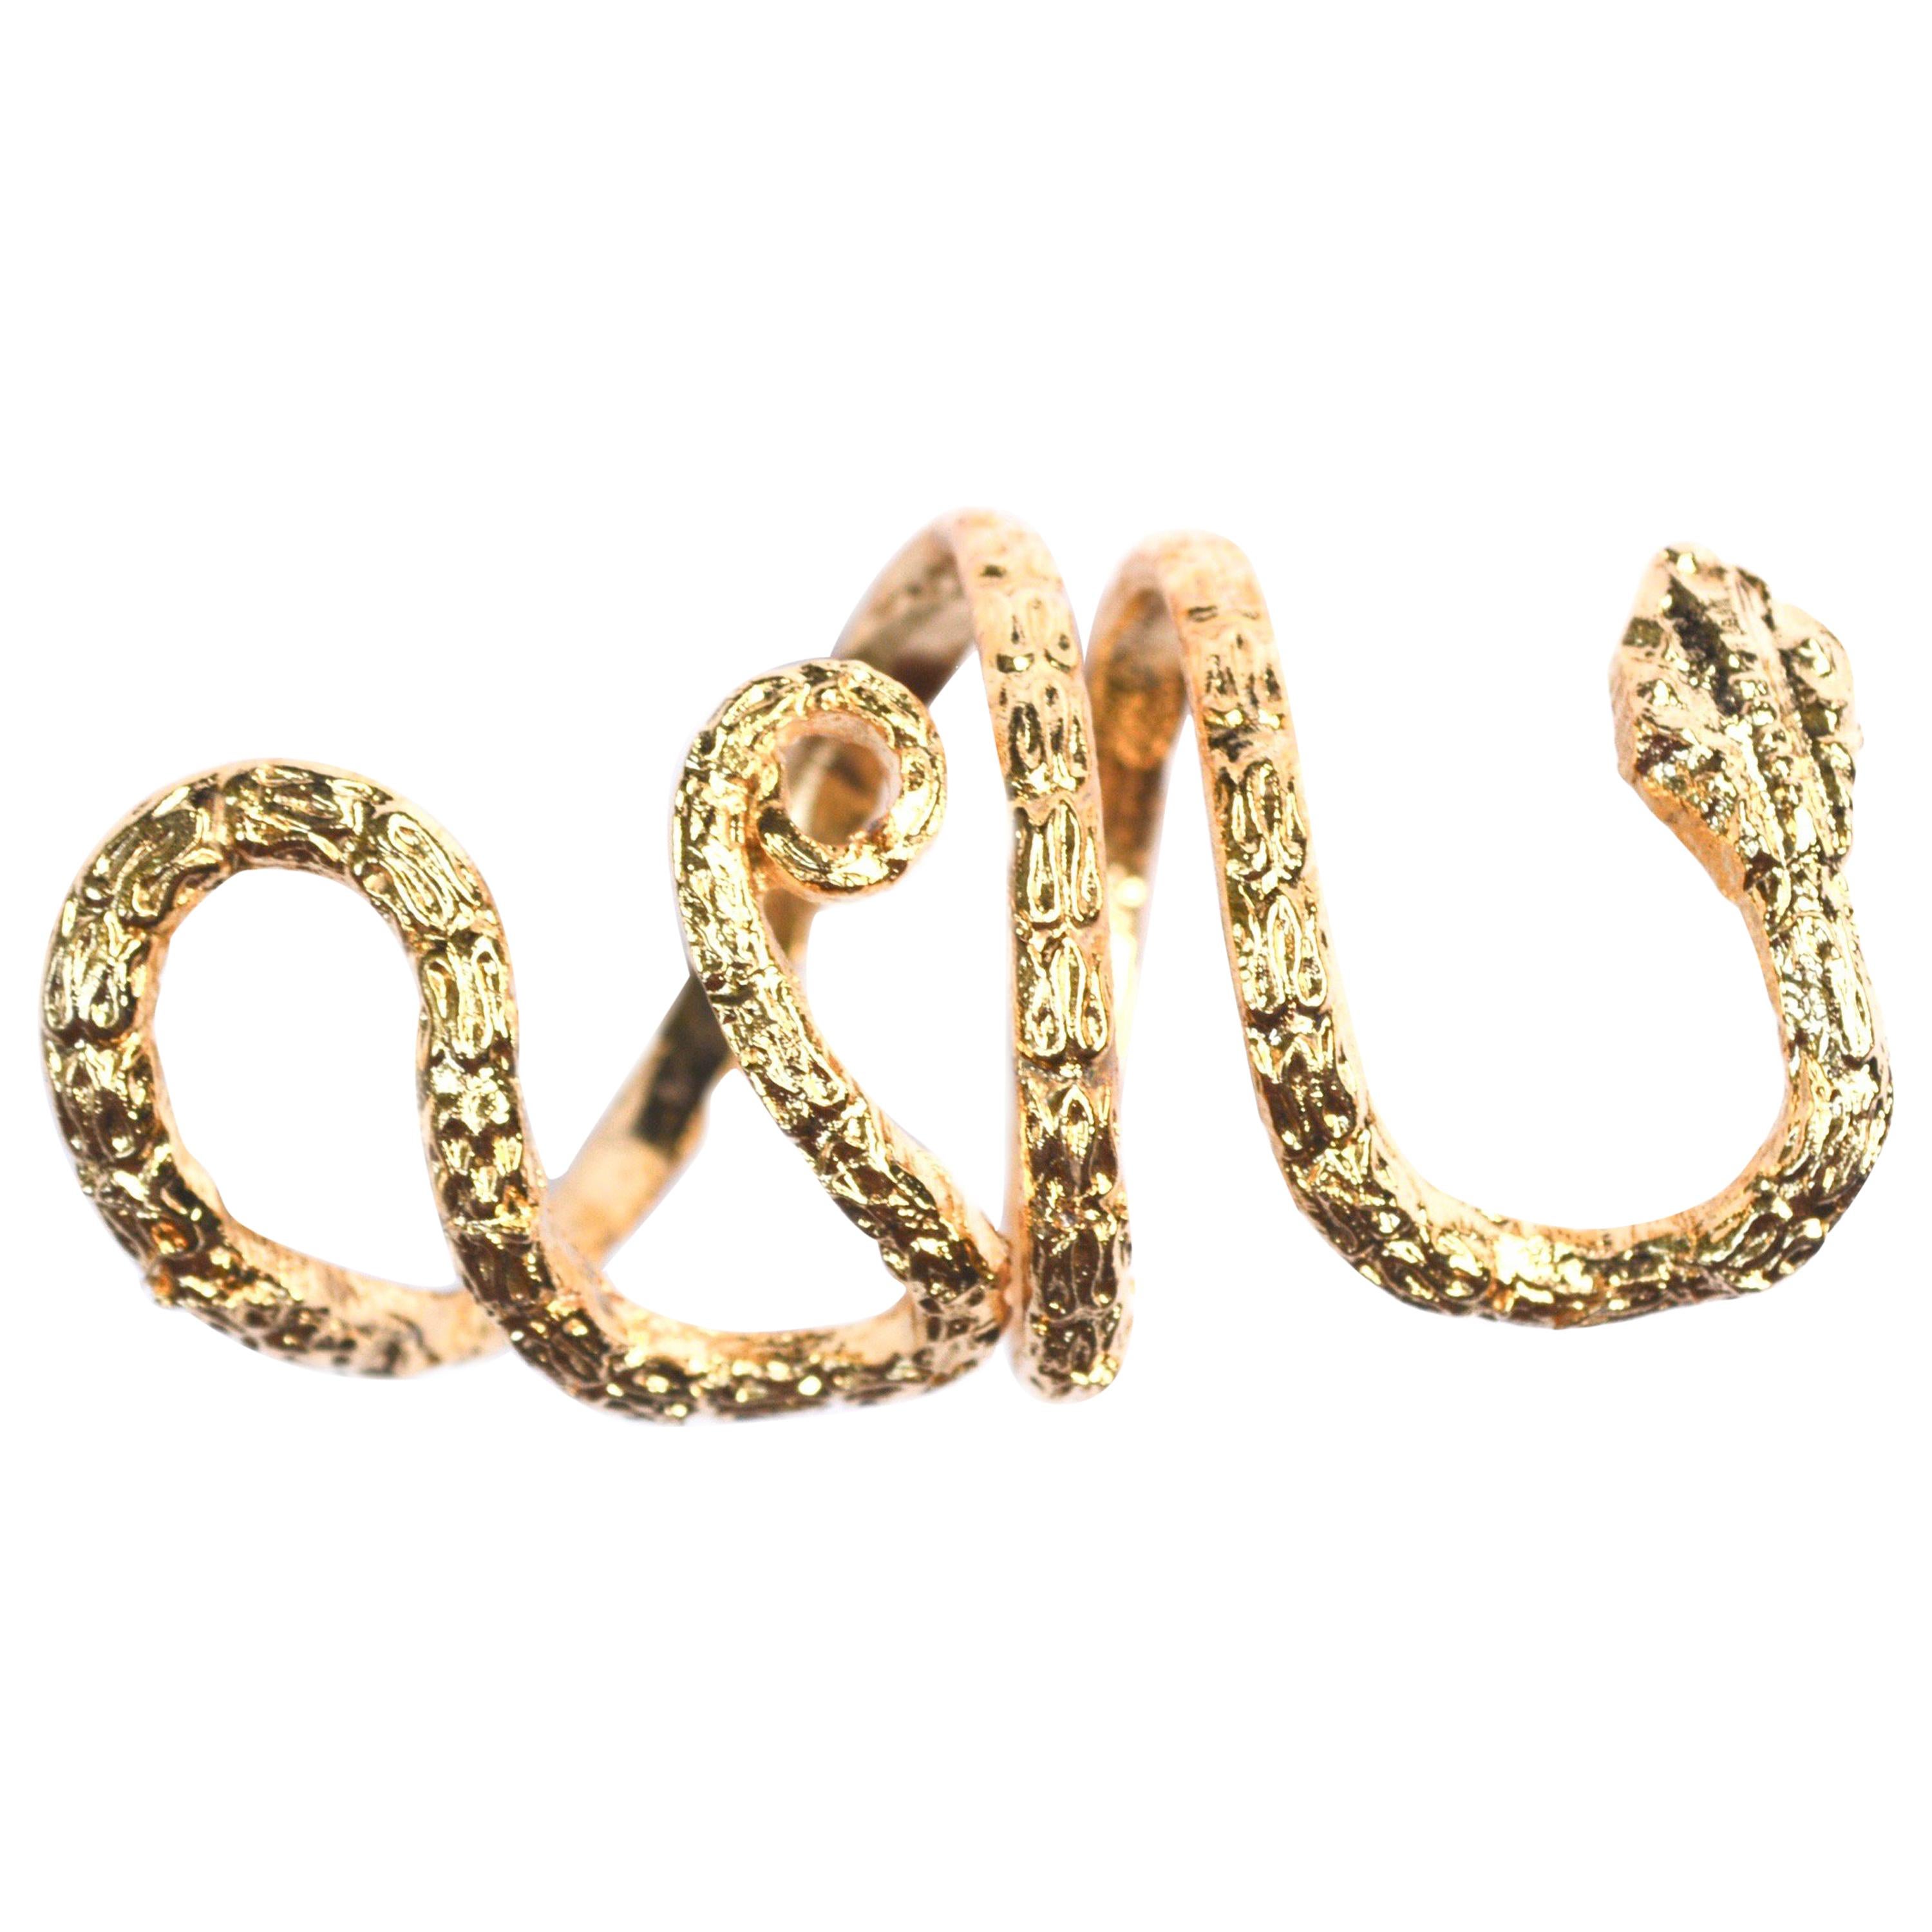 Gilt Sea Serpent Ring / Snake For Sale